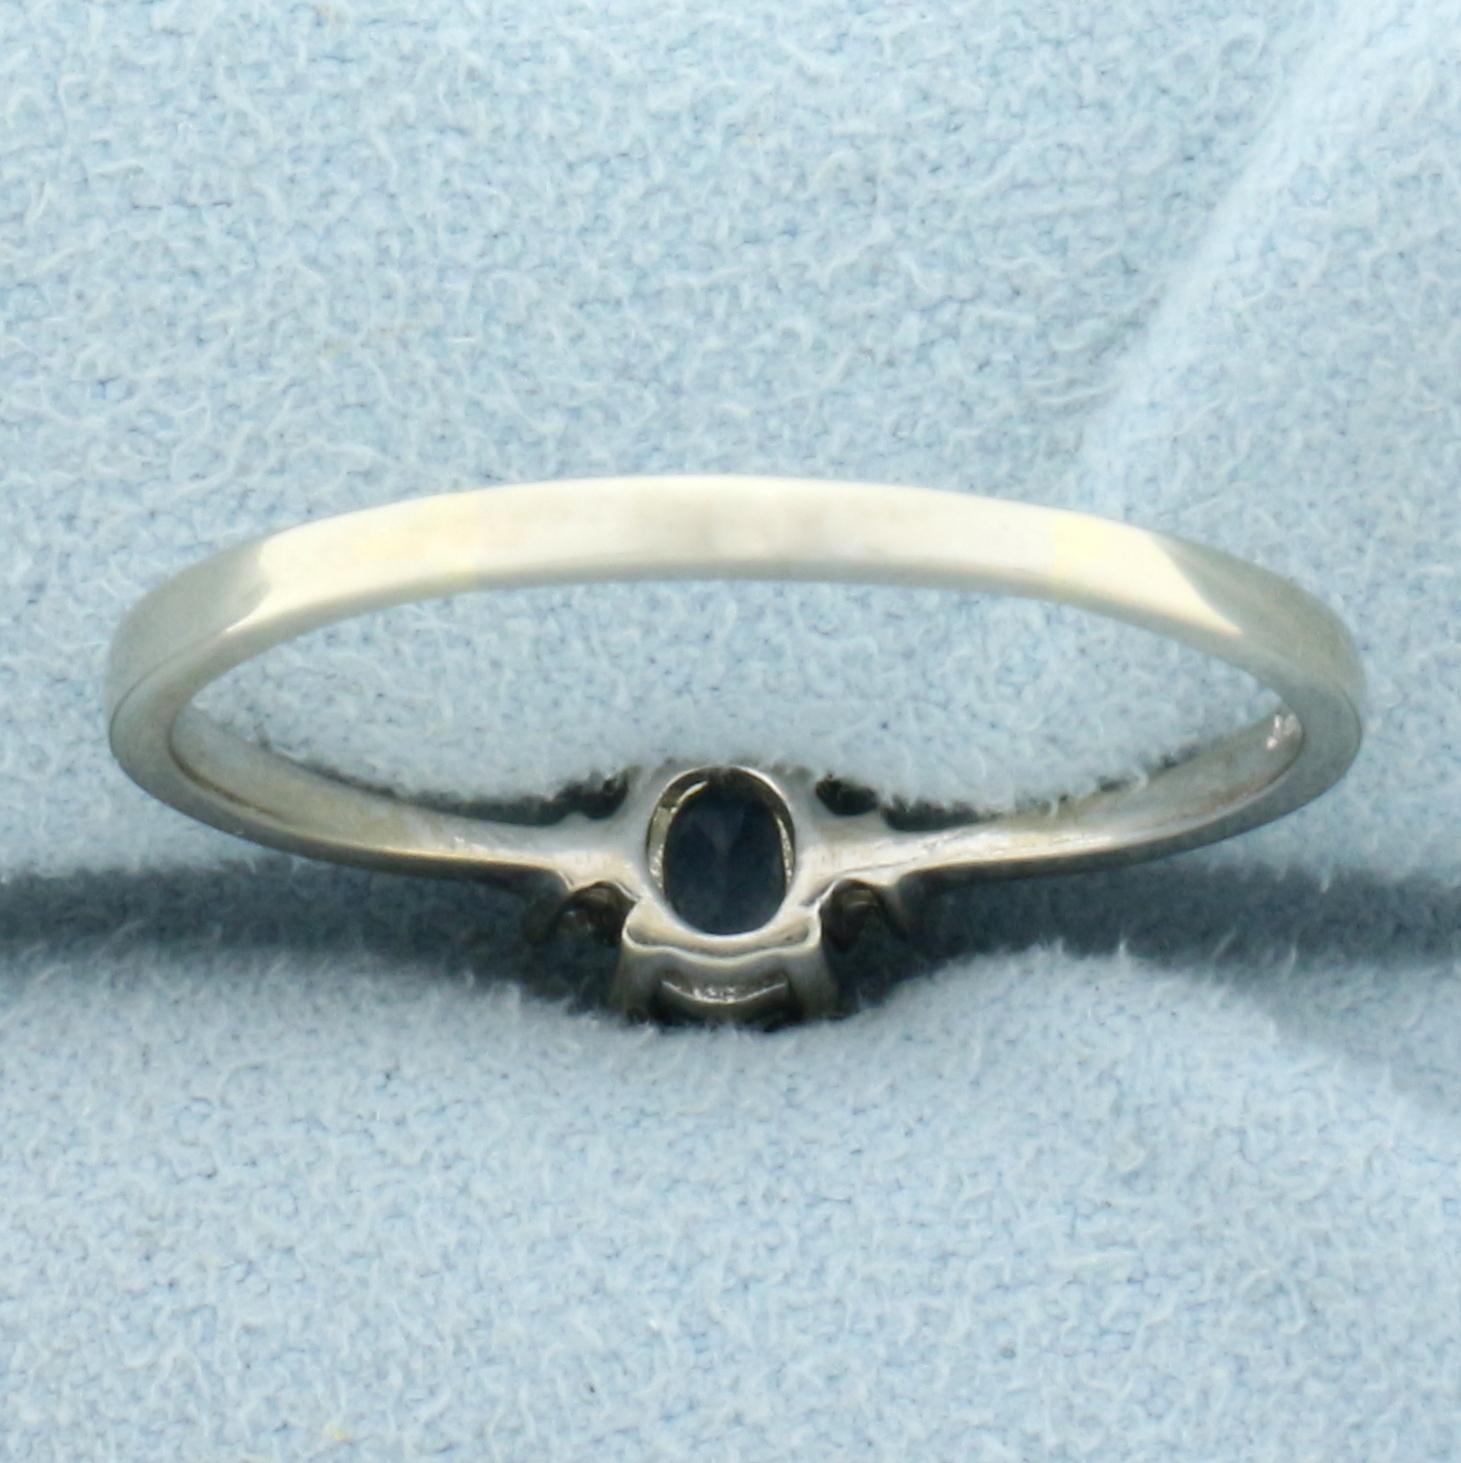 Swiss Blue Topaz And Diamond Ring In 14k White Gold